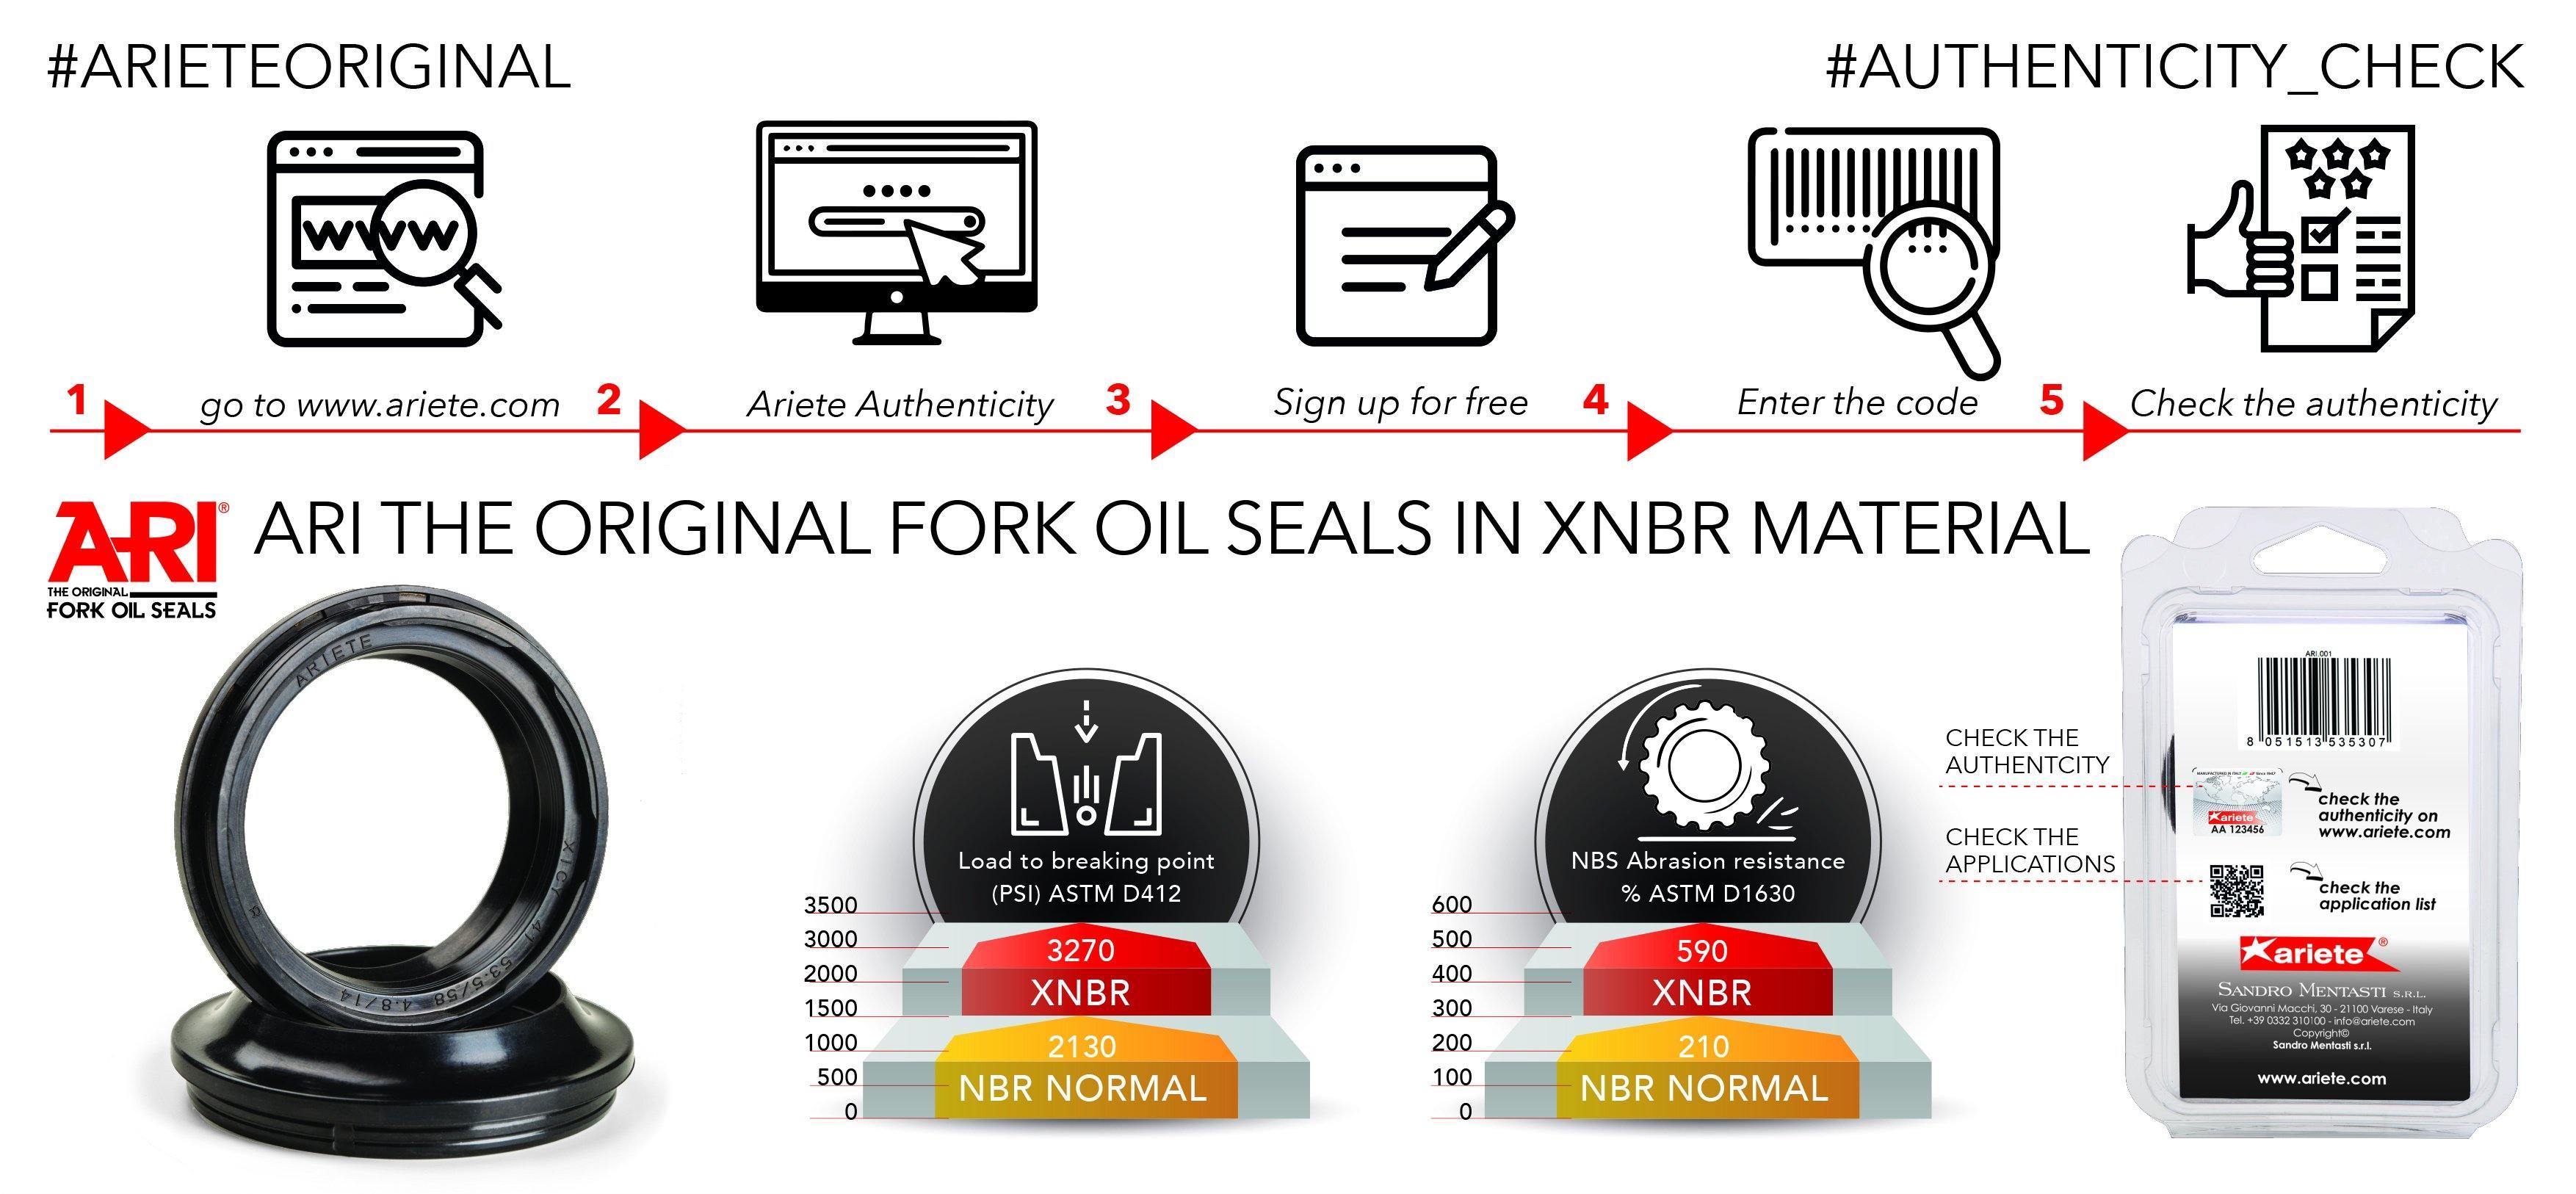 Ari Fork Oil Seal - Authenticity check